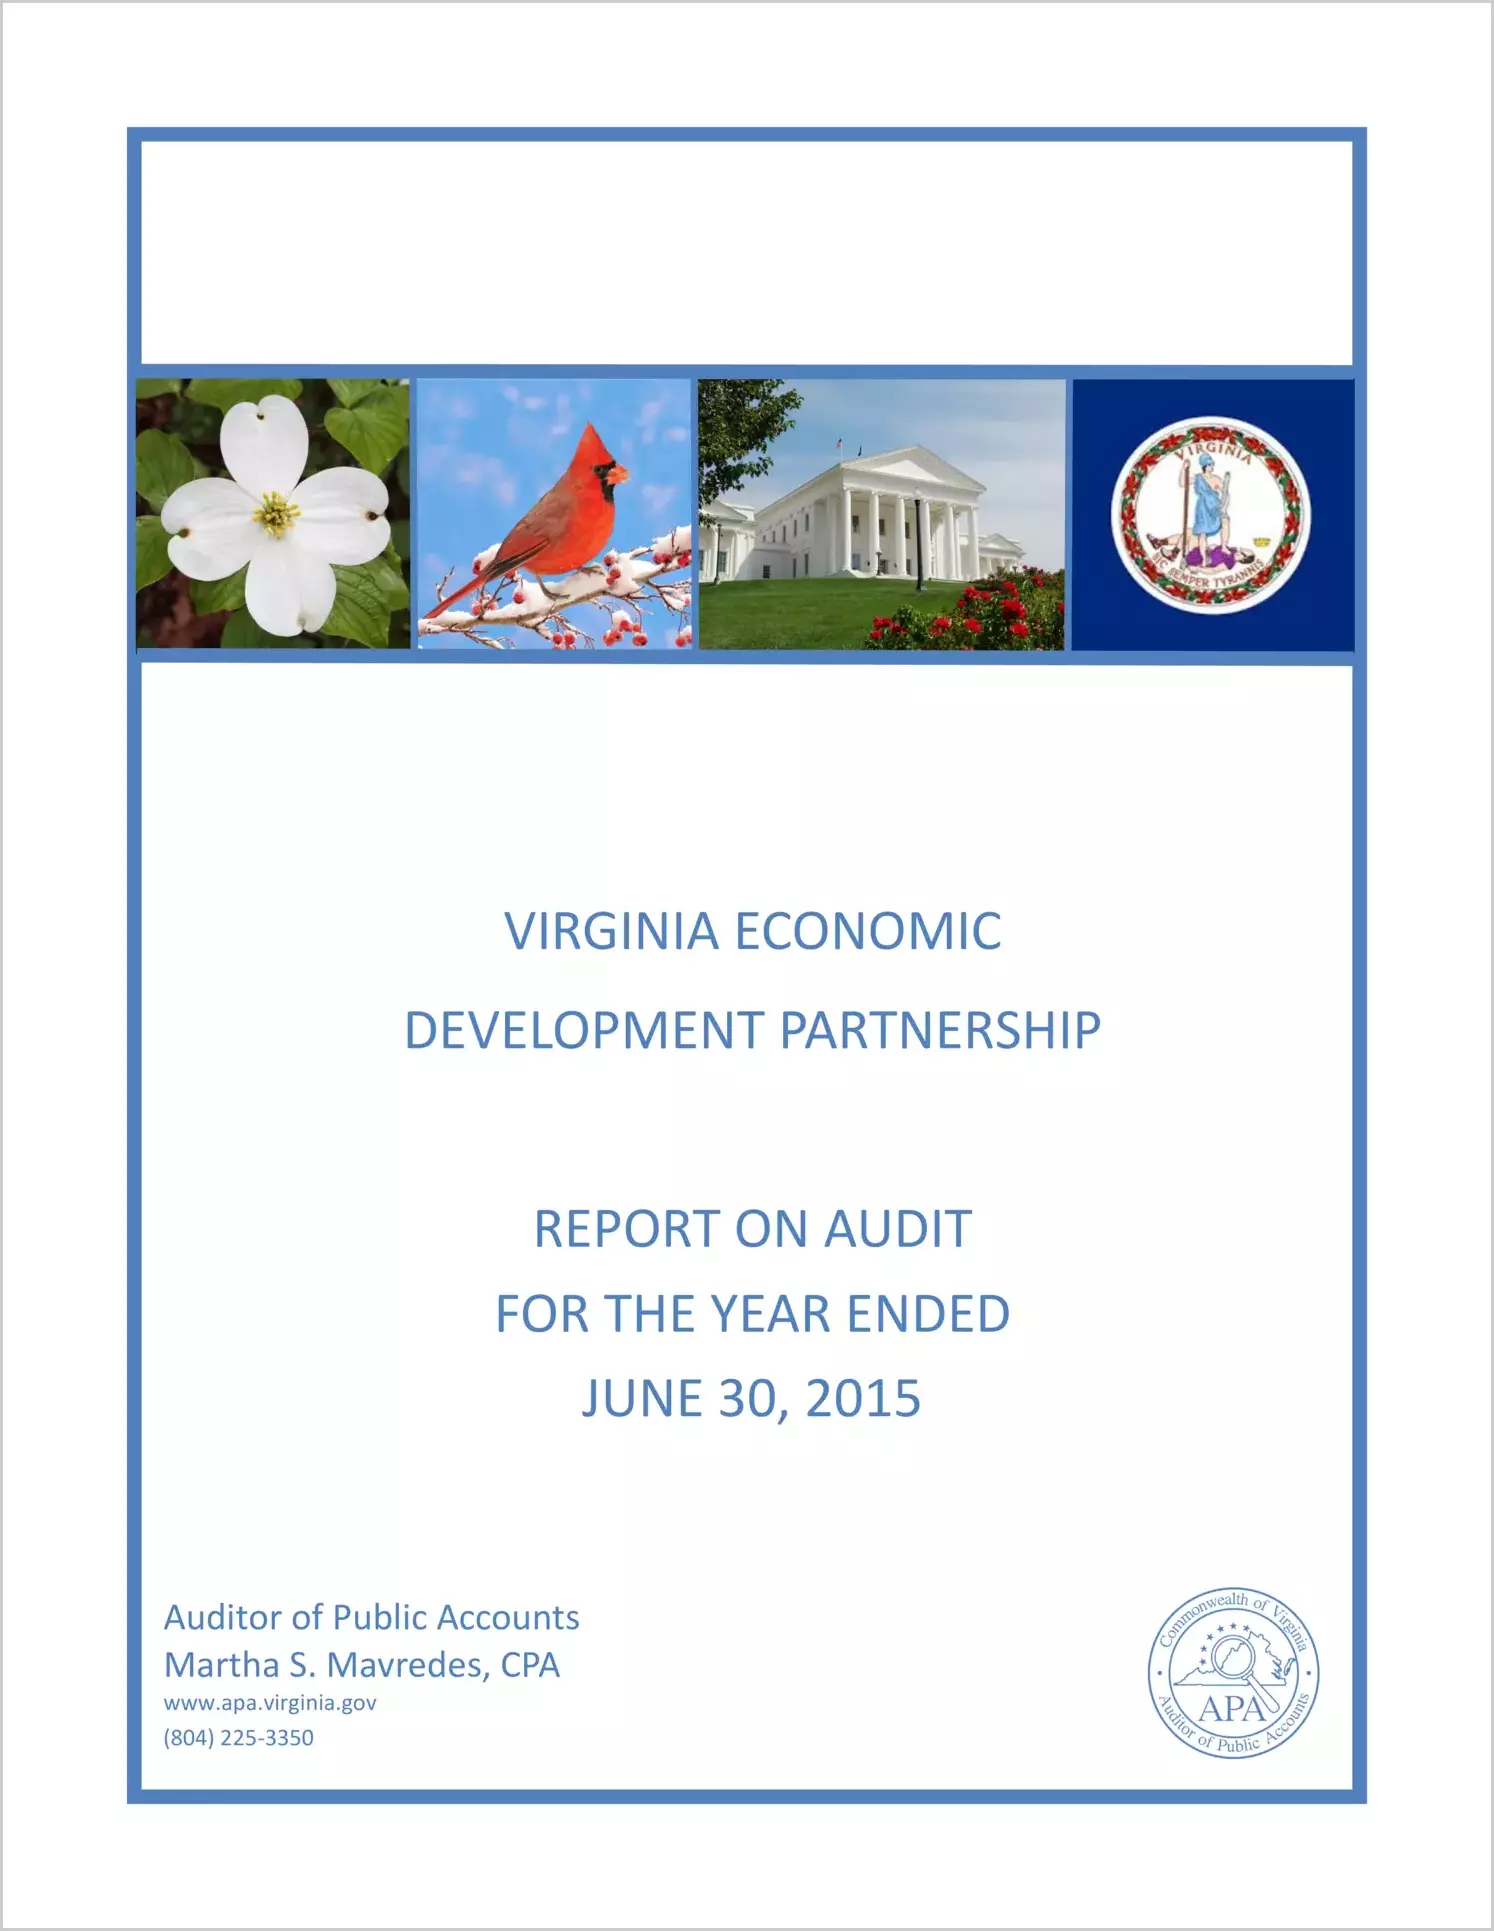 Virginia Economic Development Partnership for the year ended June 30, 2015